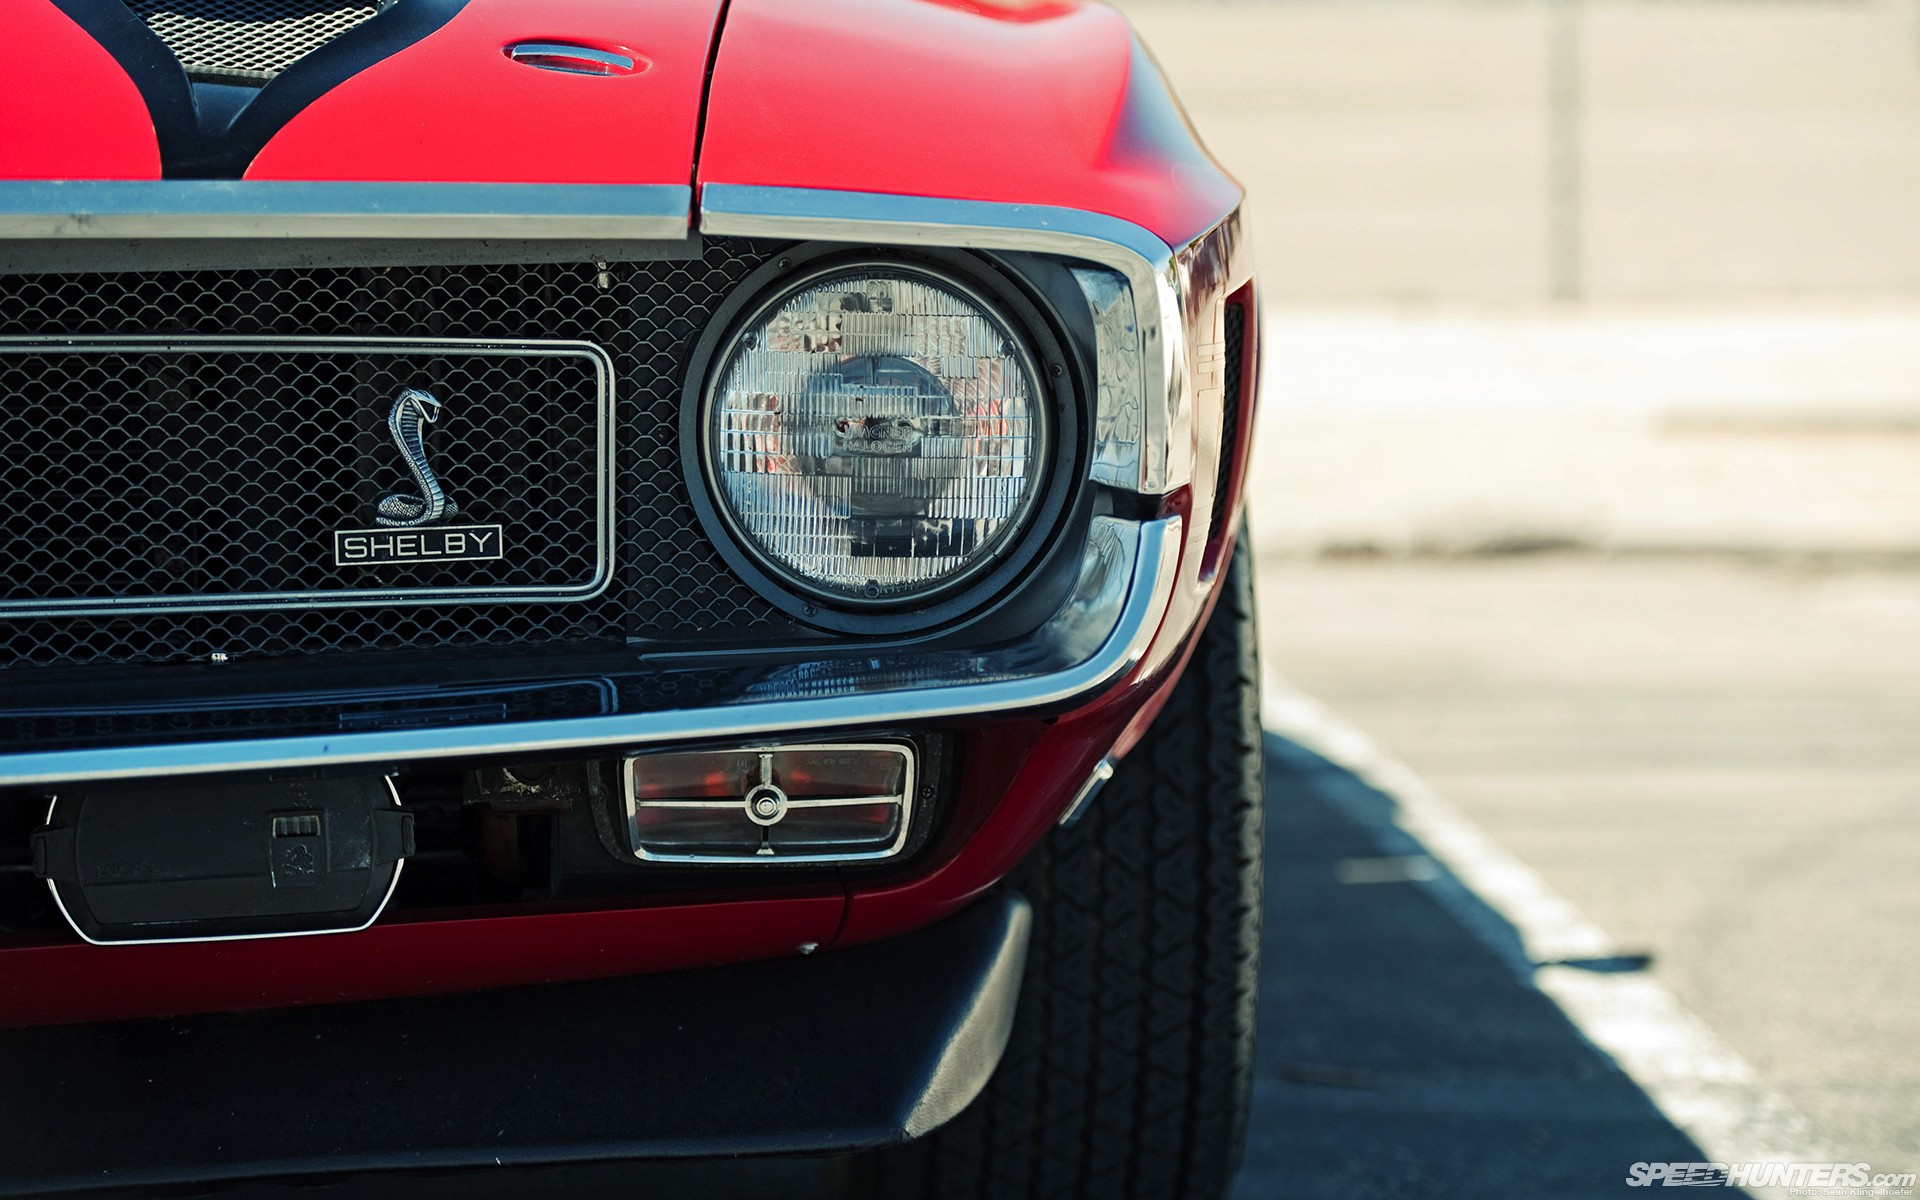 Cars Shelby Cobra SpeedHunters_com headlights wallpaper ...